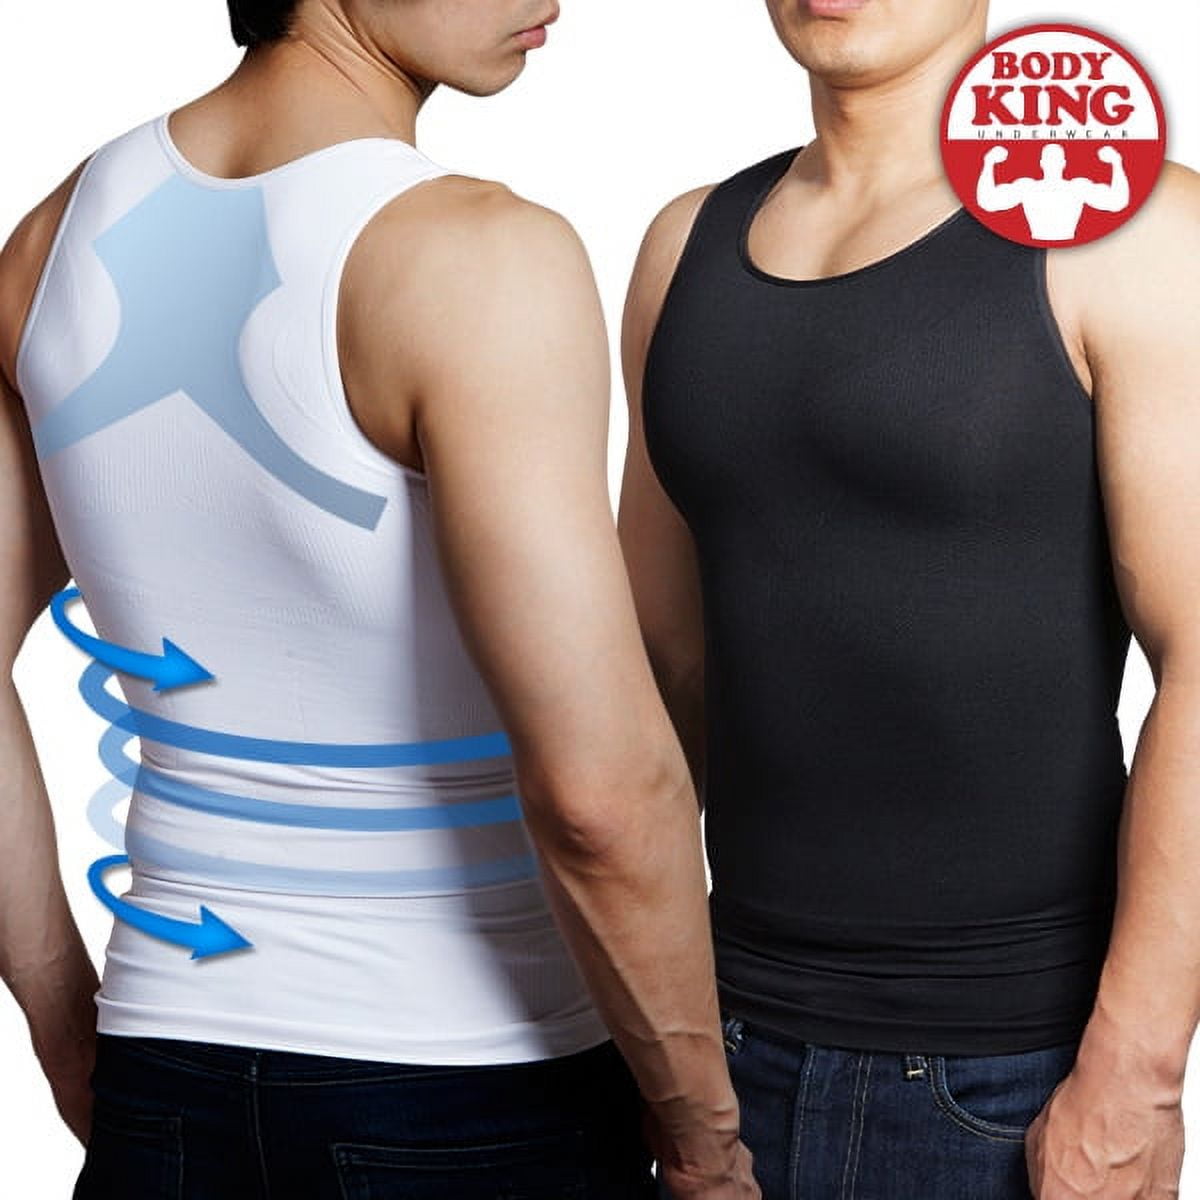 Body King] Slim Vest, Shapewear, Men's Chest Compression Slimming Body  Shaper Workout Undershirts 